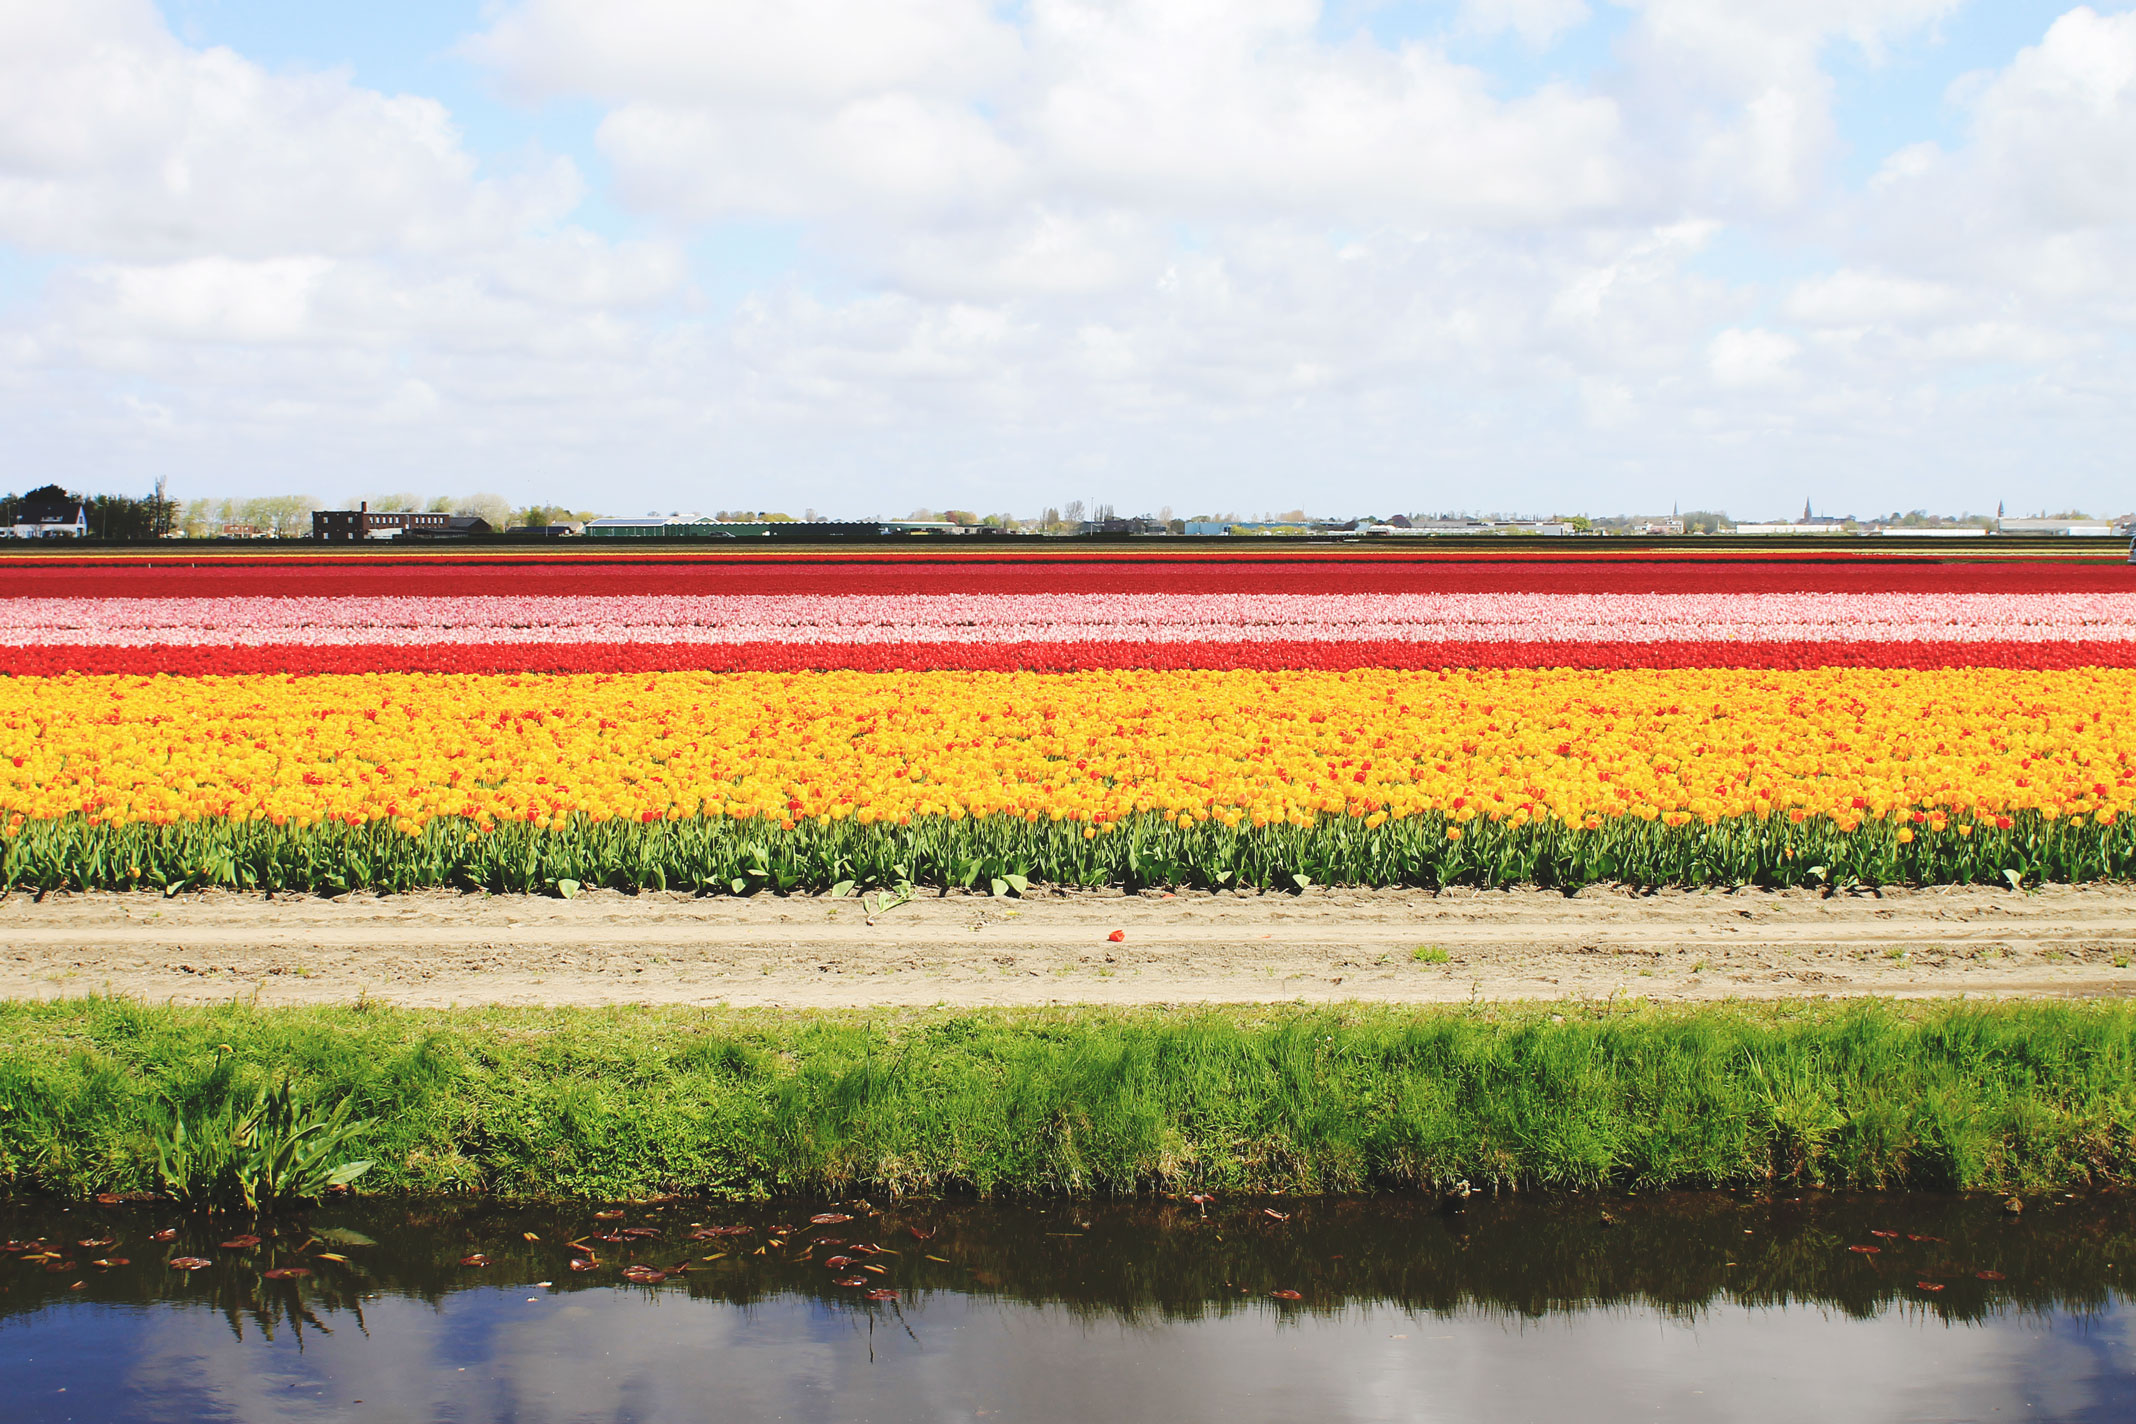 STYLEAT30 Travel + Fashion Blog - Keukenhof Gardens and Tulip Fields Tour from Amsterdam - Holland Tulips - 21